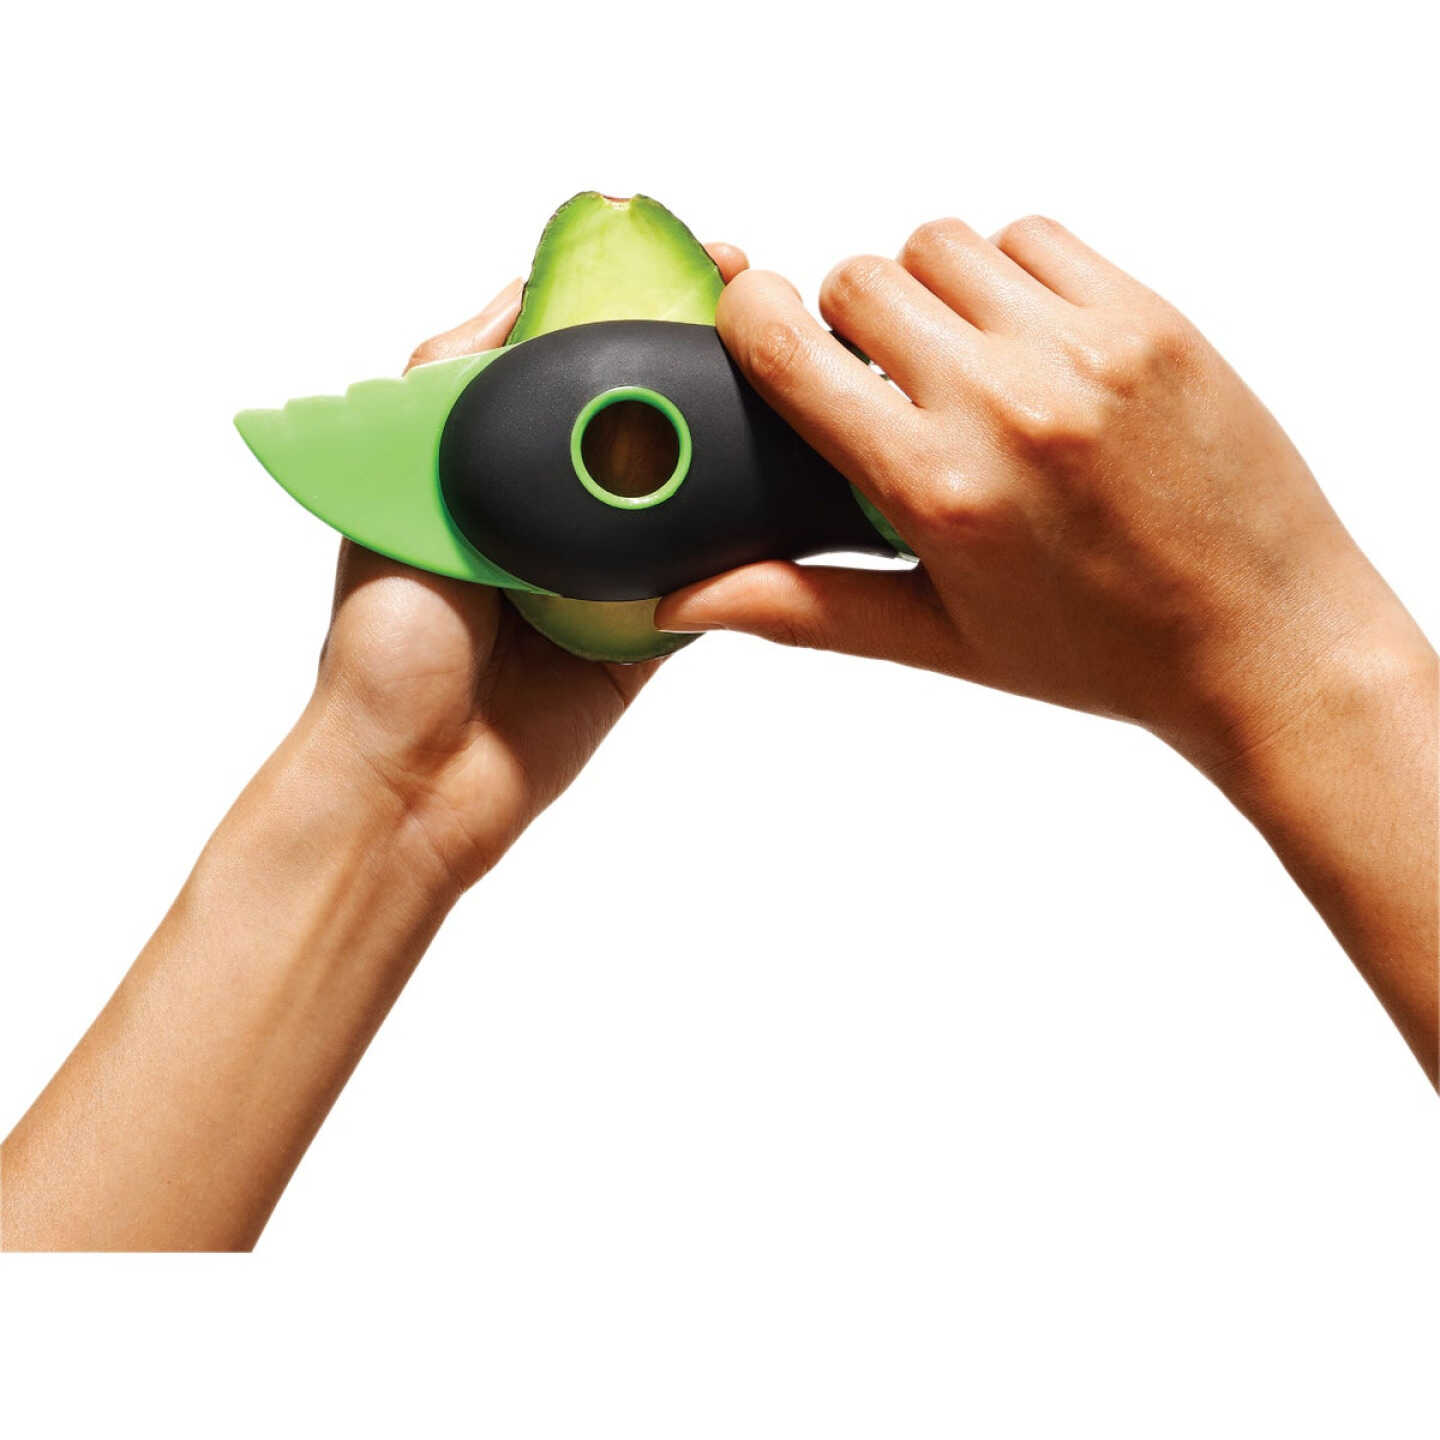 OXO Good Grips 3-in-1 Avocado Slicer - Green & Scoop and Smash Good Grips  Avocado Tool, Masher, Black